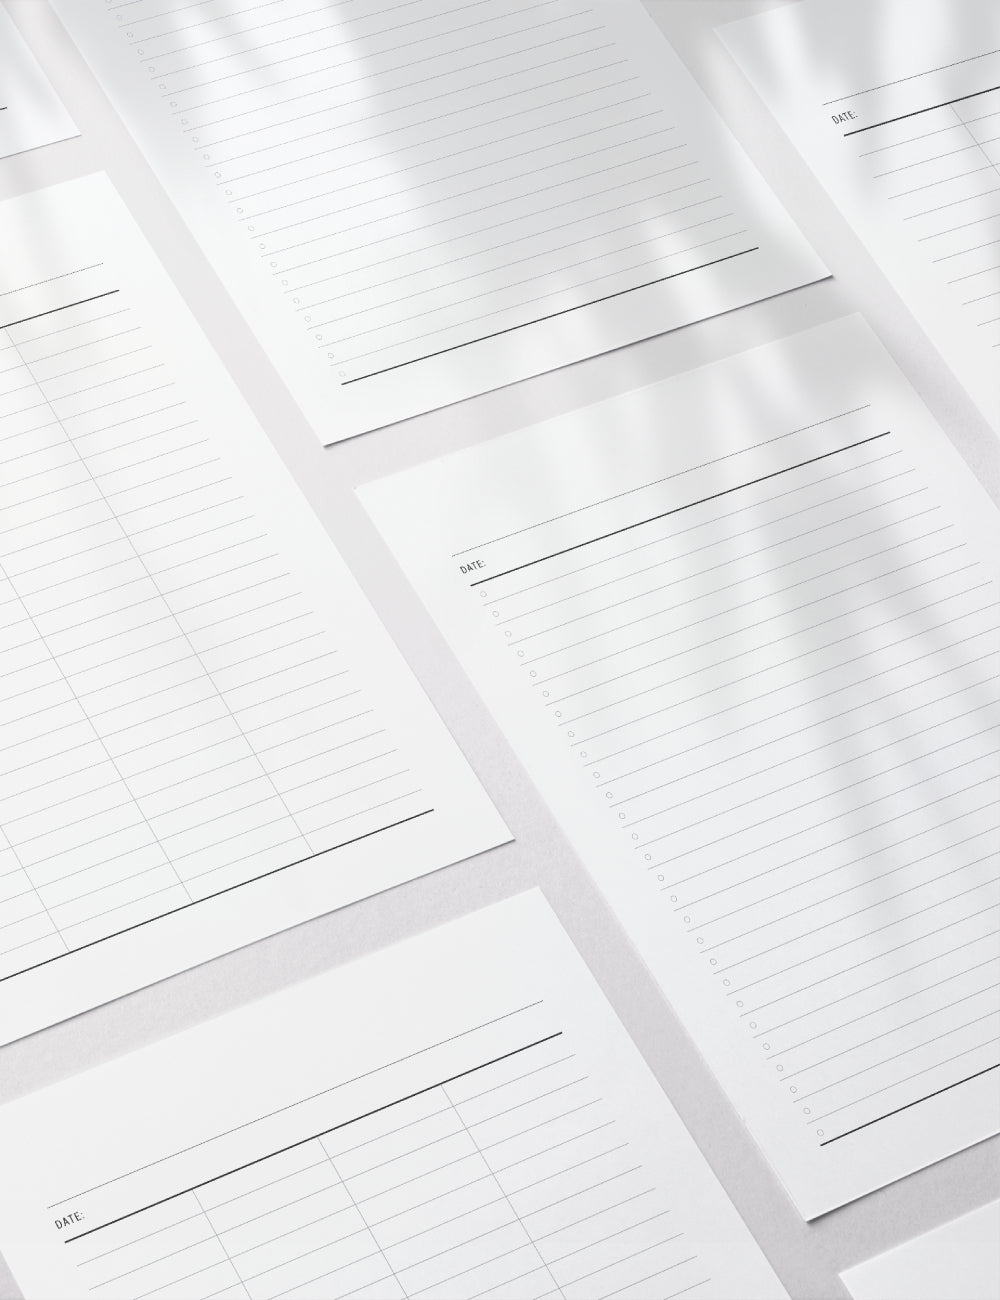 Printable Notes, Lists, Tables | A4 | A5 | US Letter | PDF + JPEG